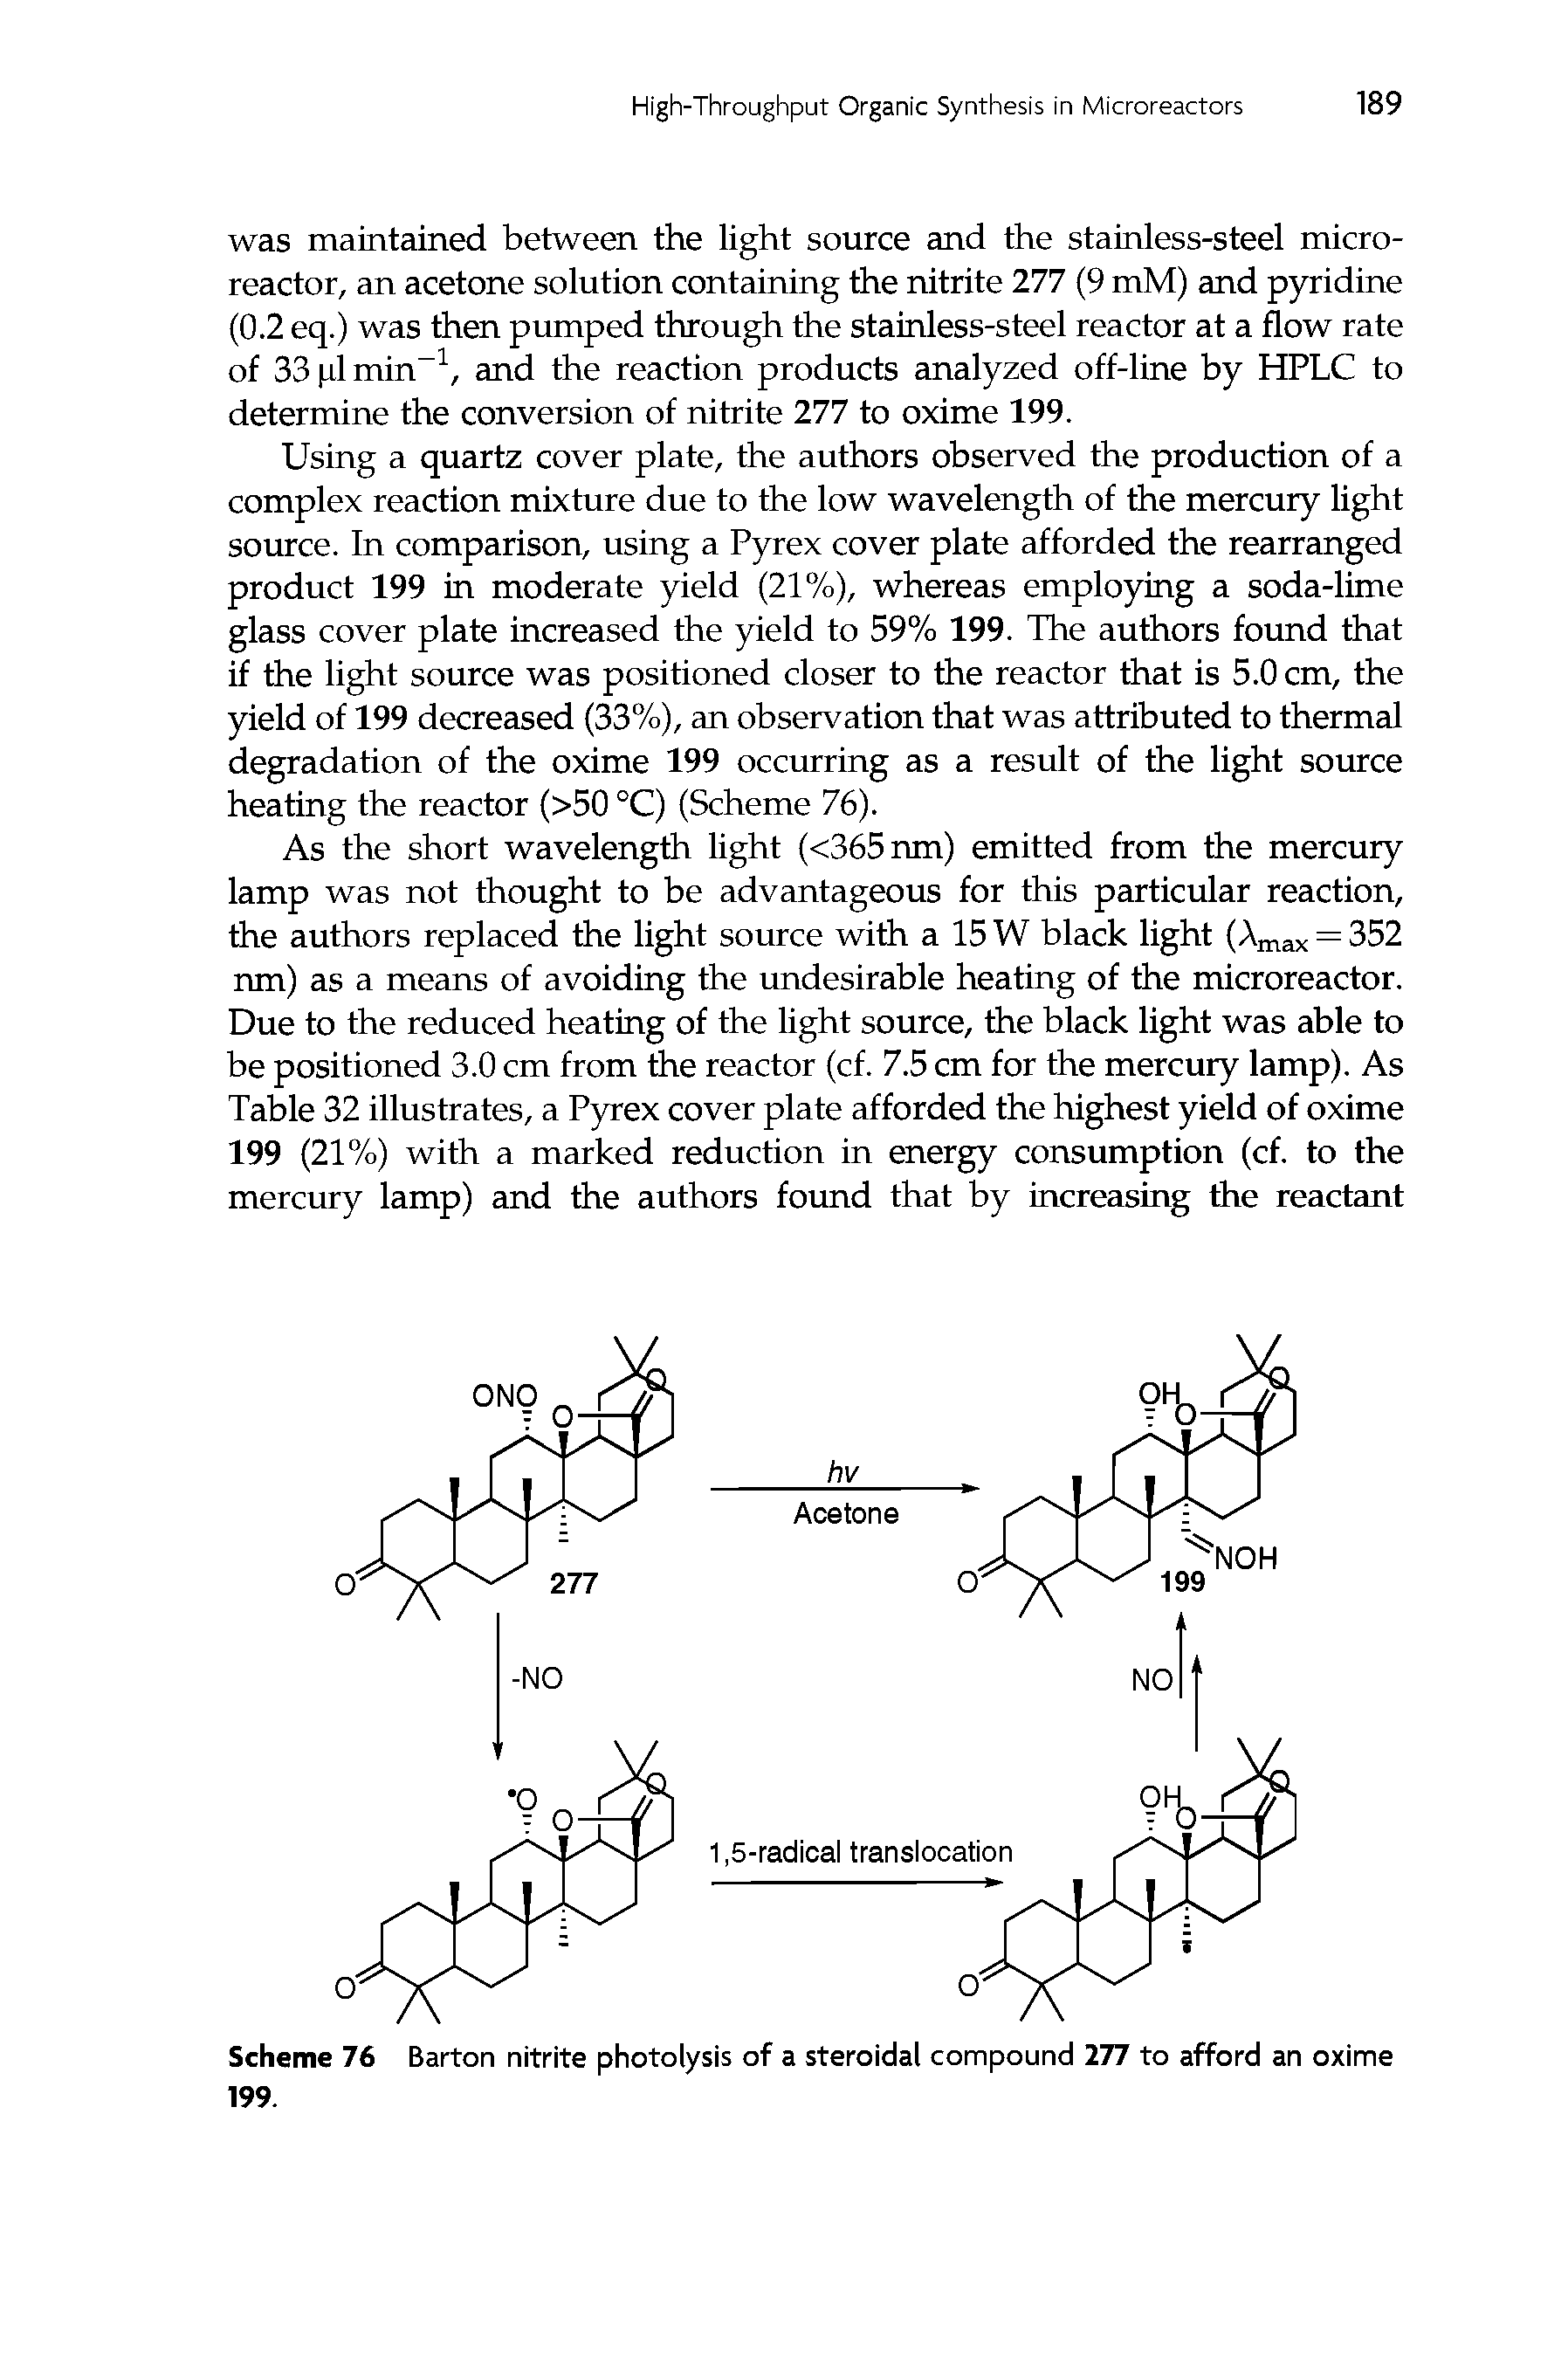 Scheme 76 Barton nitrite photolysis of a steroidal compound 277 to afford an oxime 199.